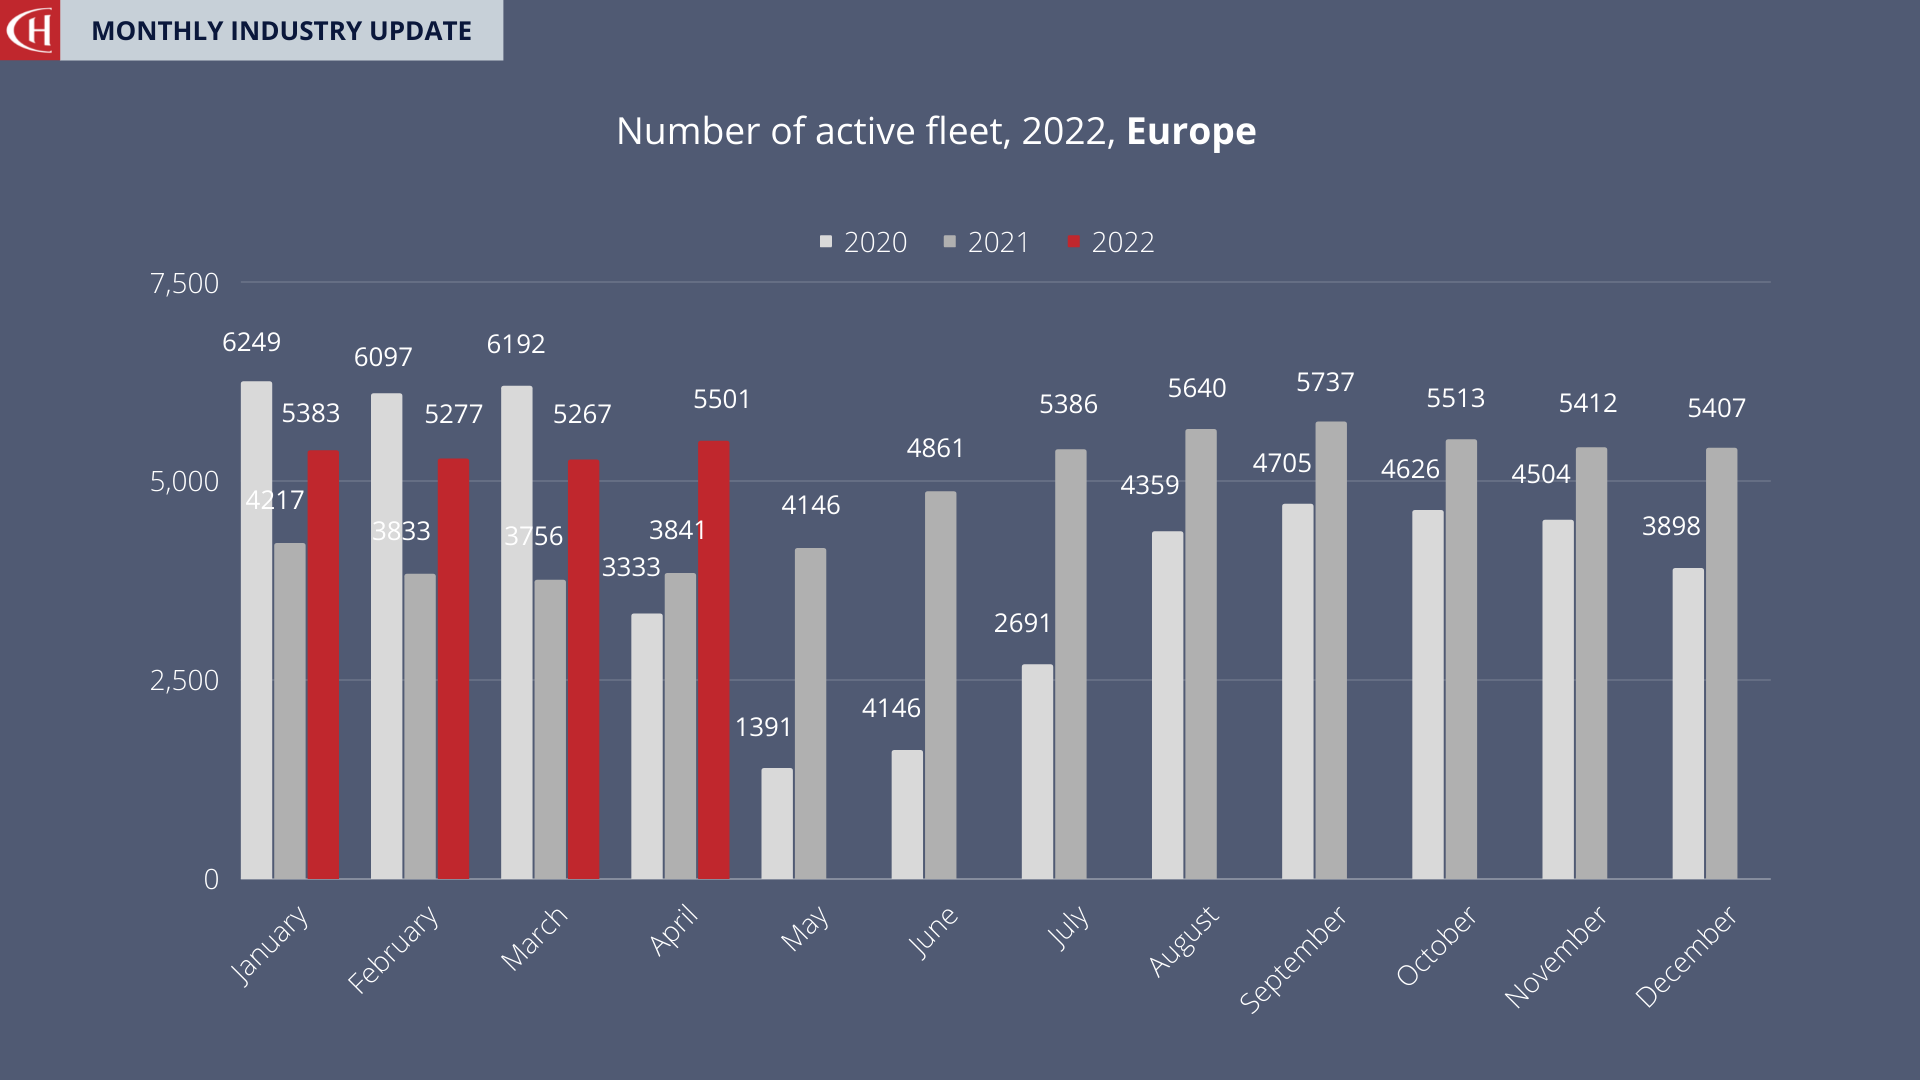 Europe Fleet Size April 2022